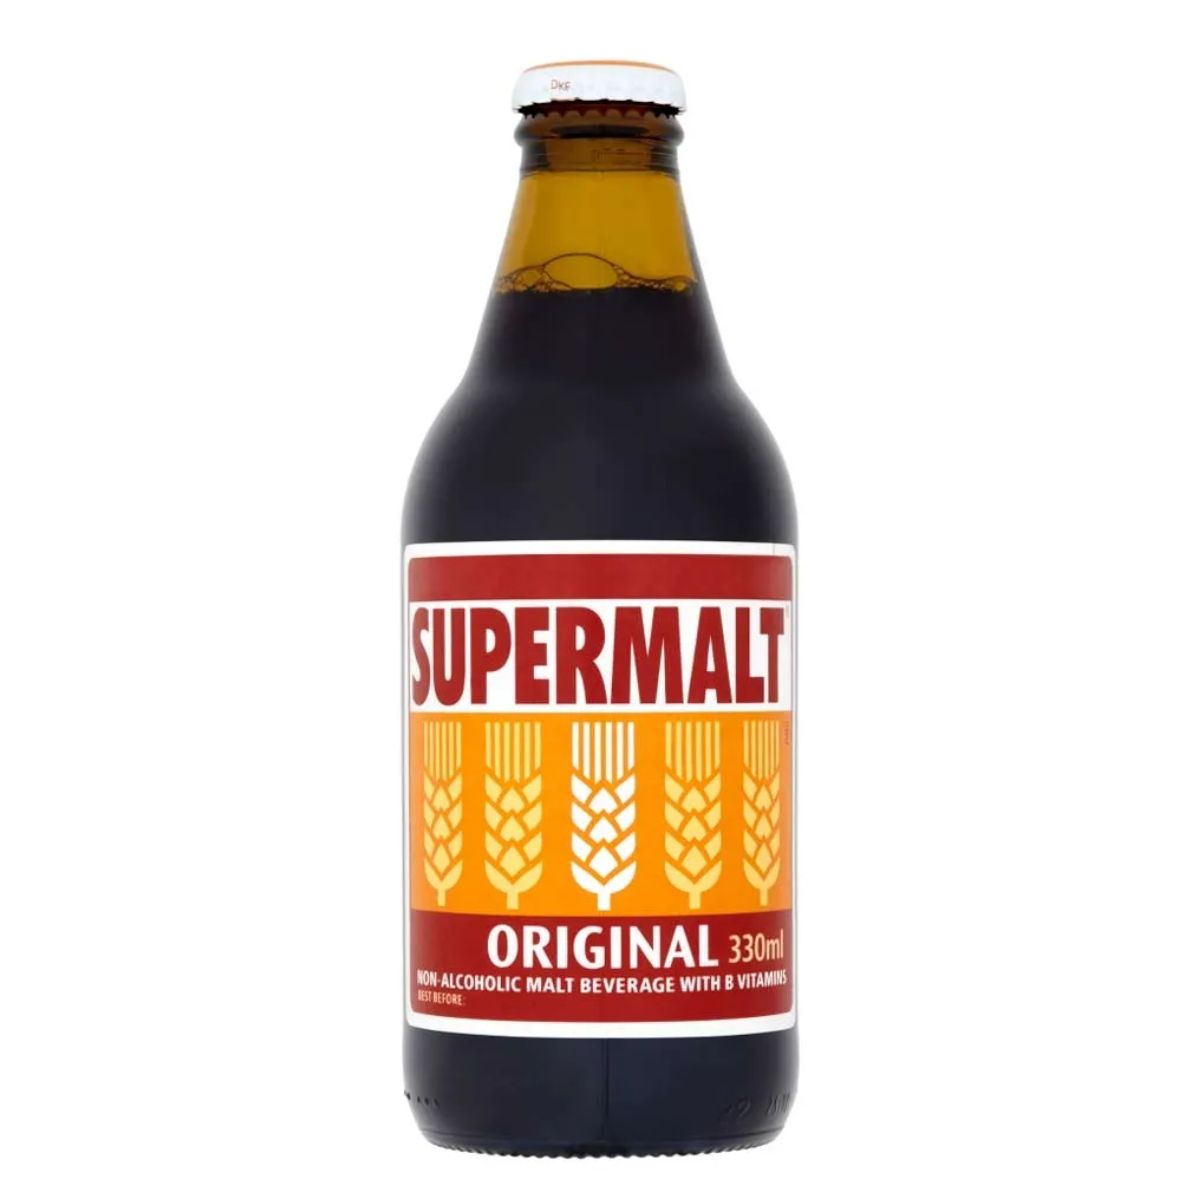 A bottle of Supermalt - Original Non Alcoholic Malt Drink - 330ml on a white background.